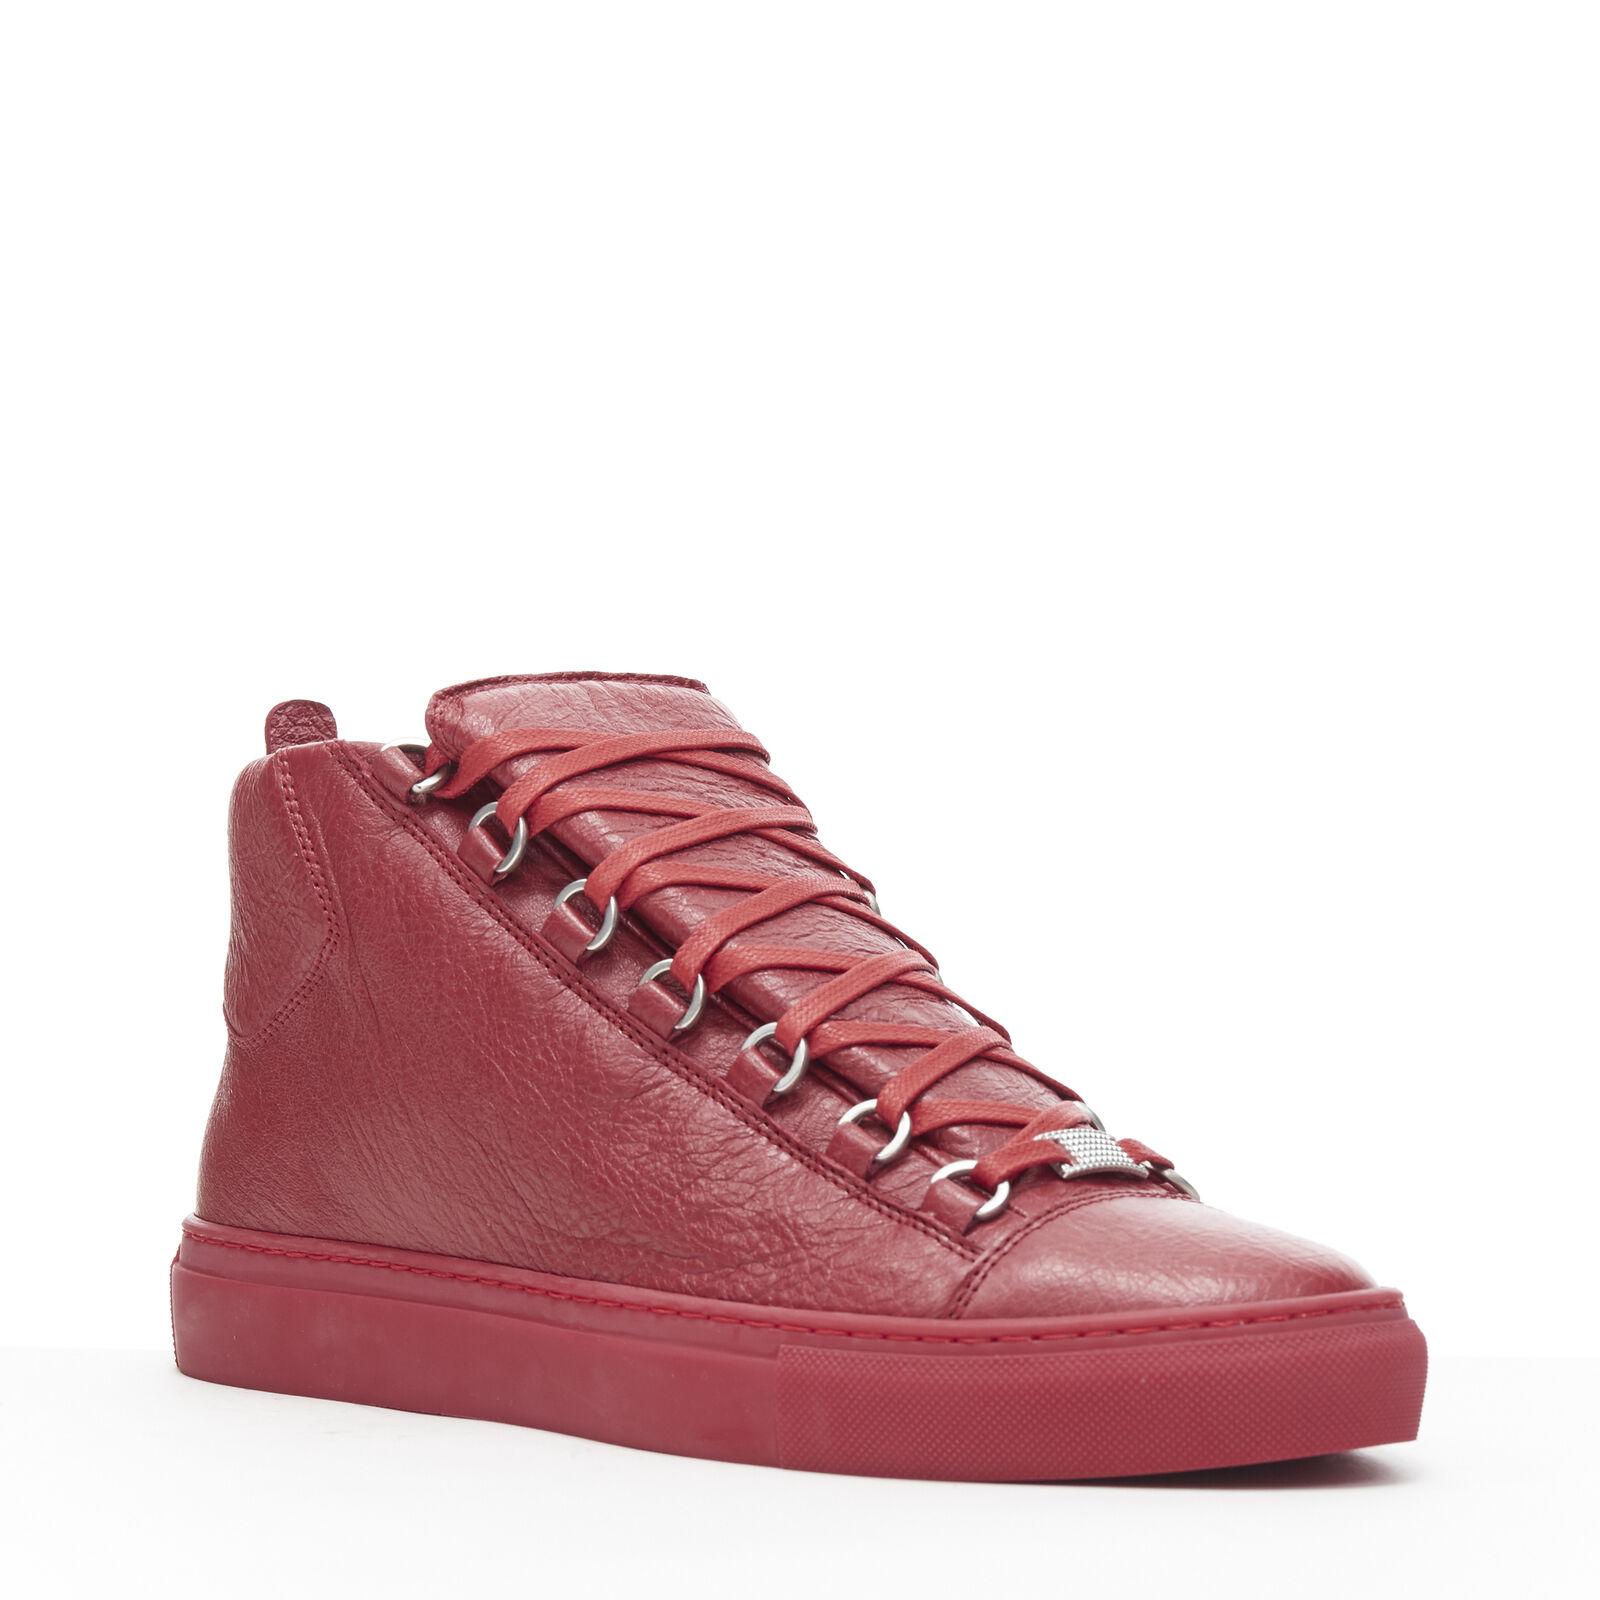 BALENCIAGA Arena Red High Leather Shoes, Sneakers Men’s Size 11, EU 44